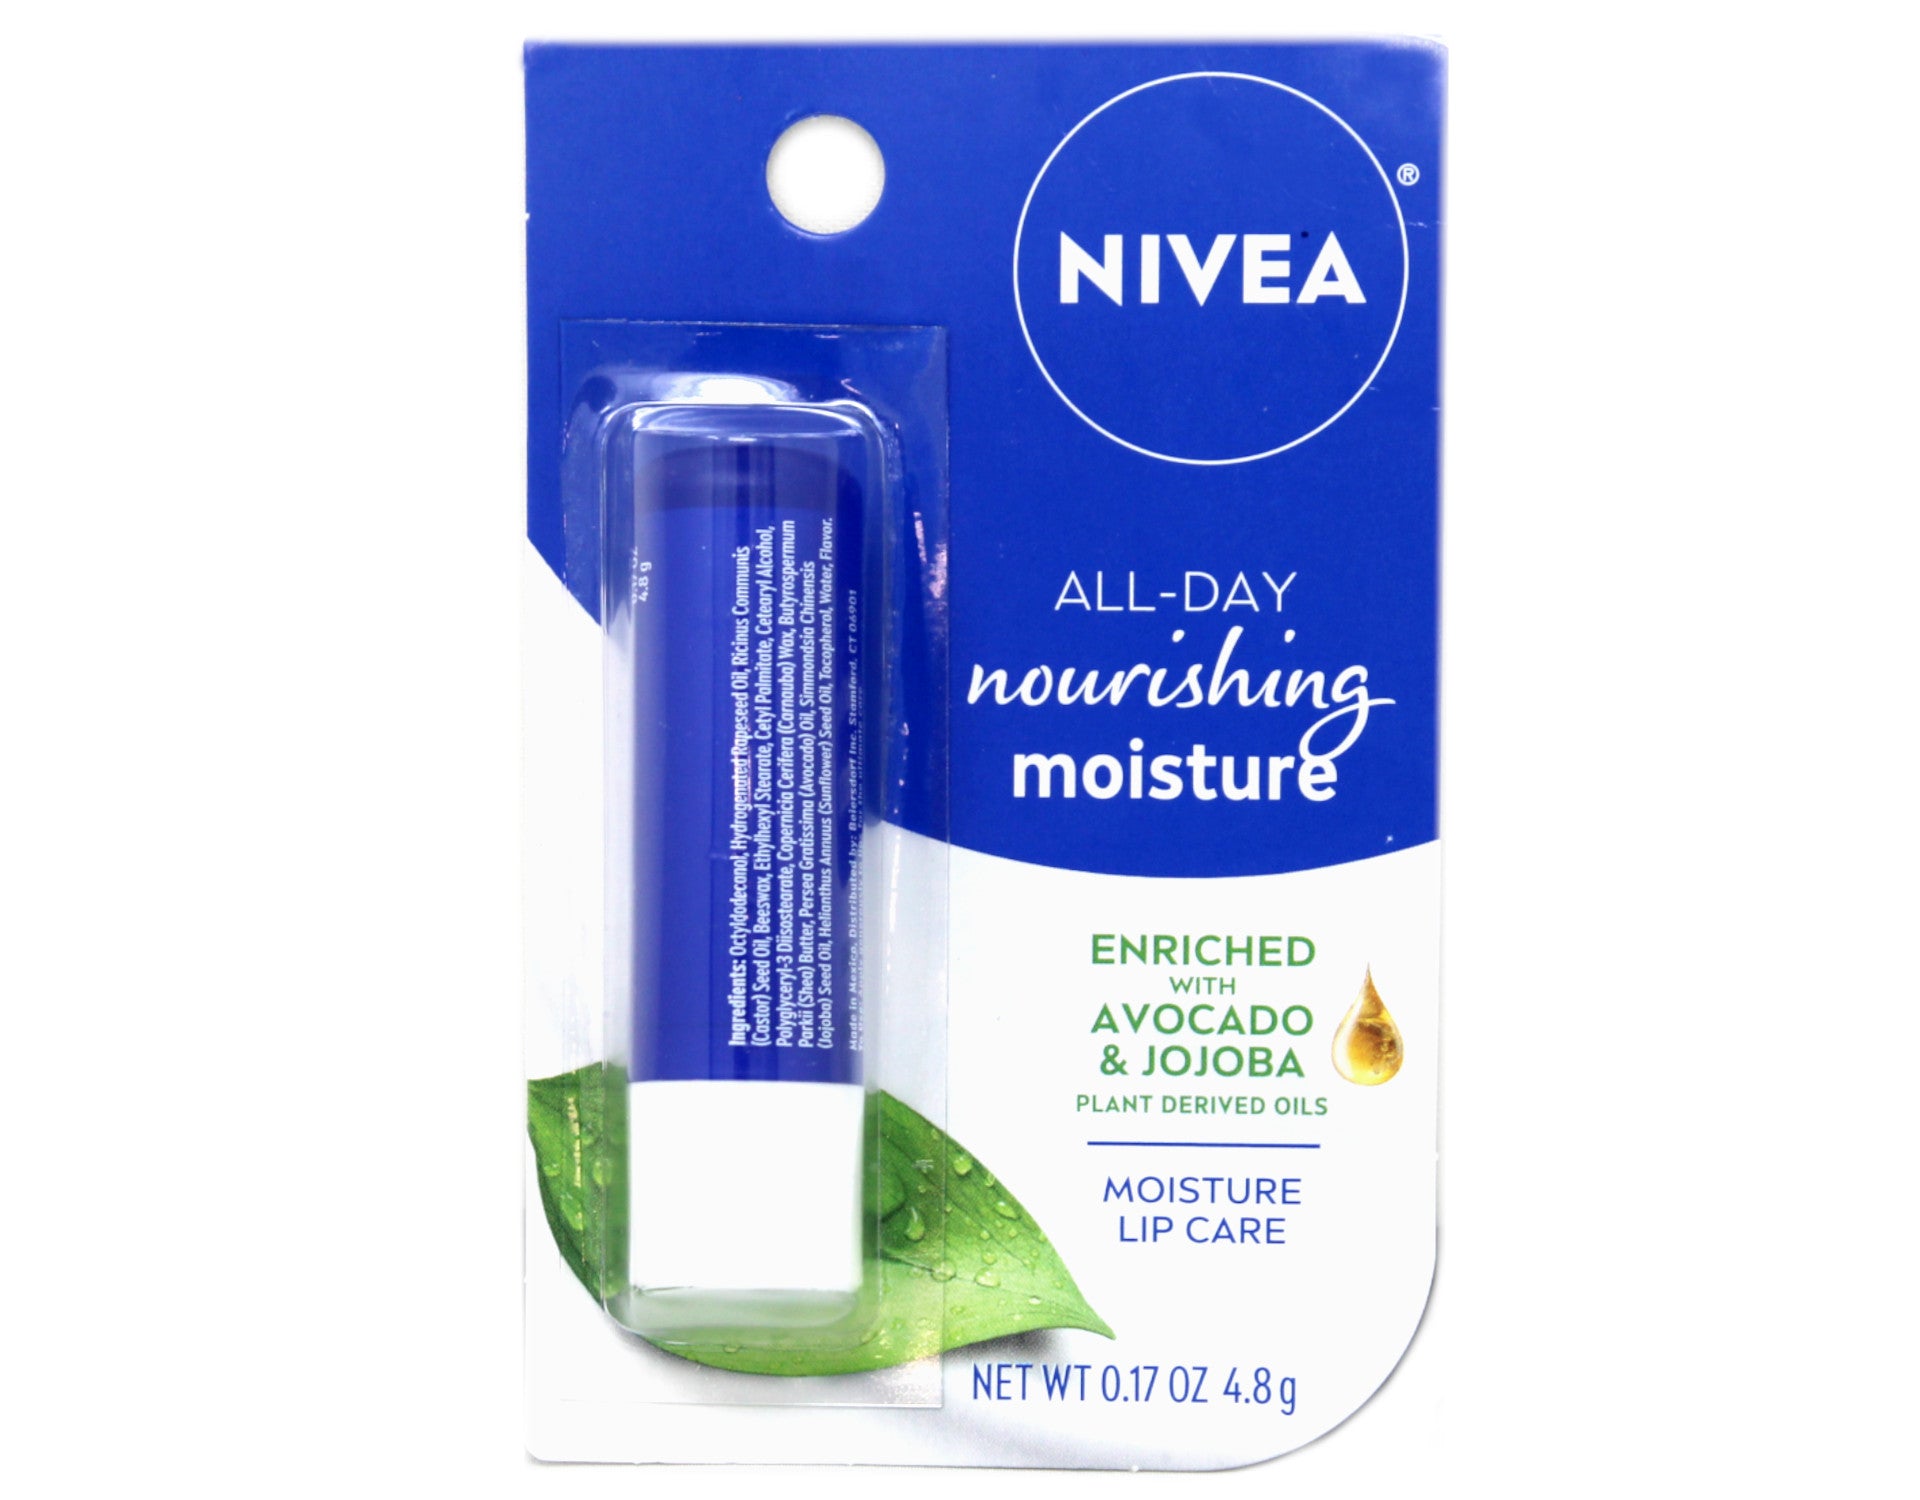 Nivea All-Day Nourishing Moisture Lip Care 0.17oz